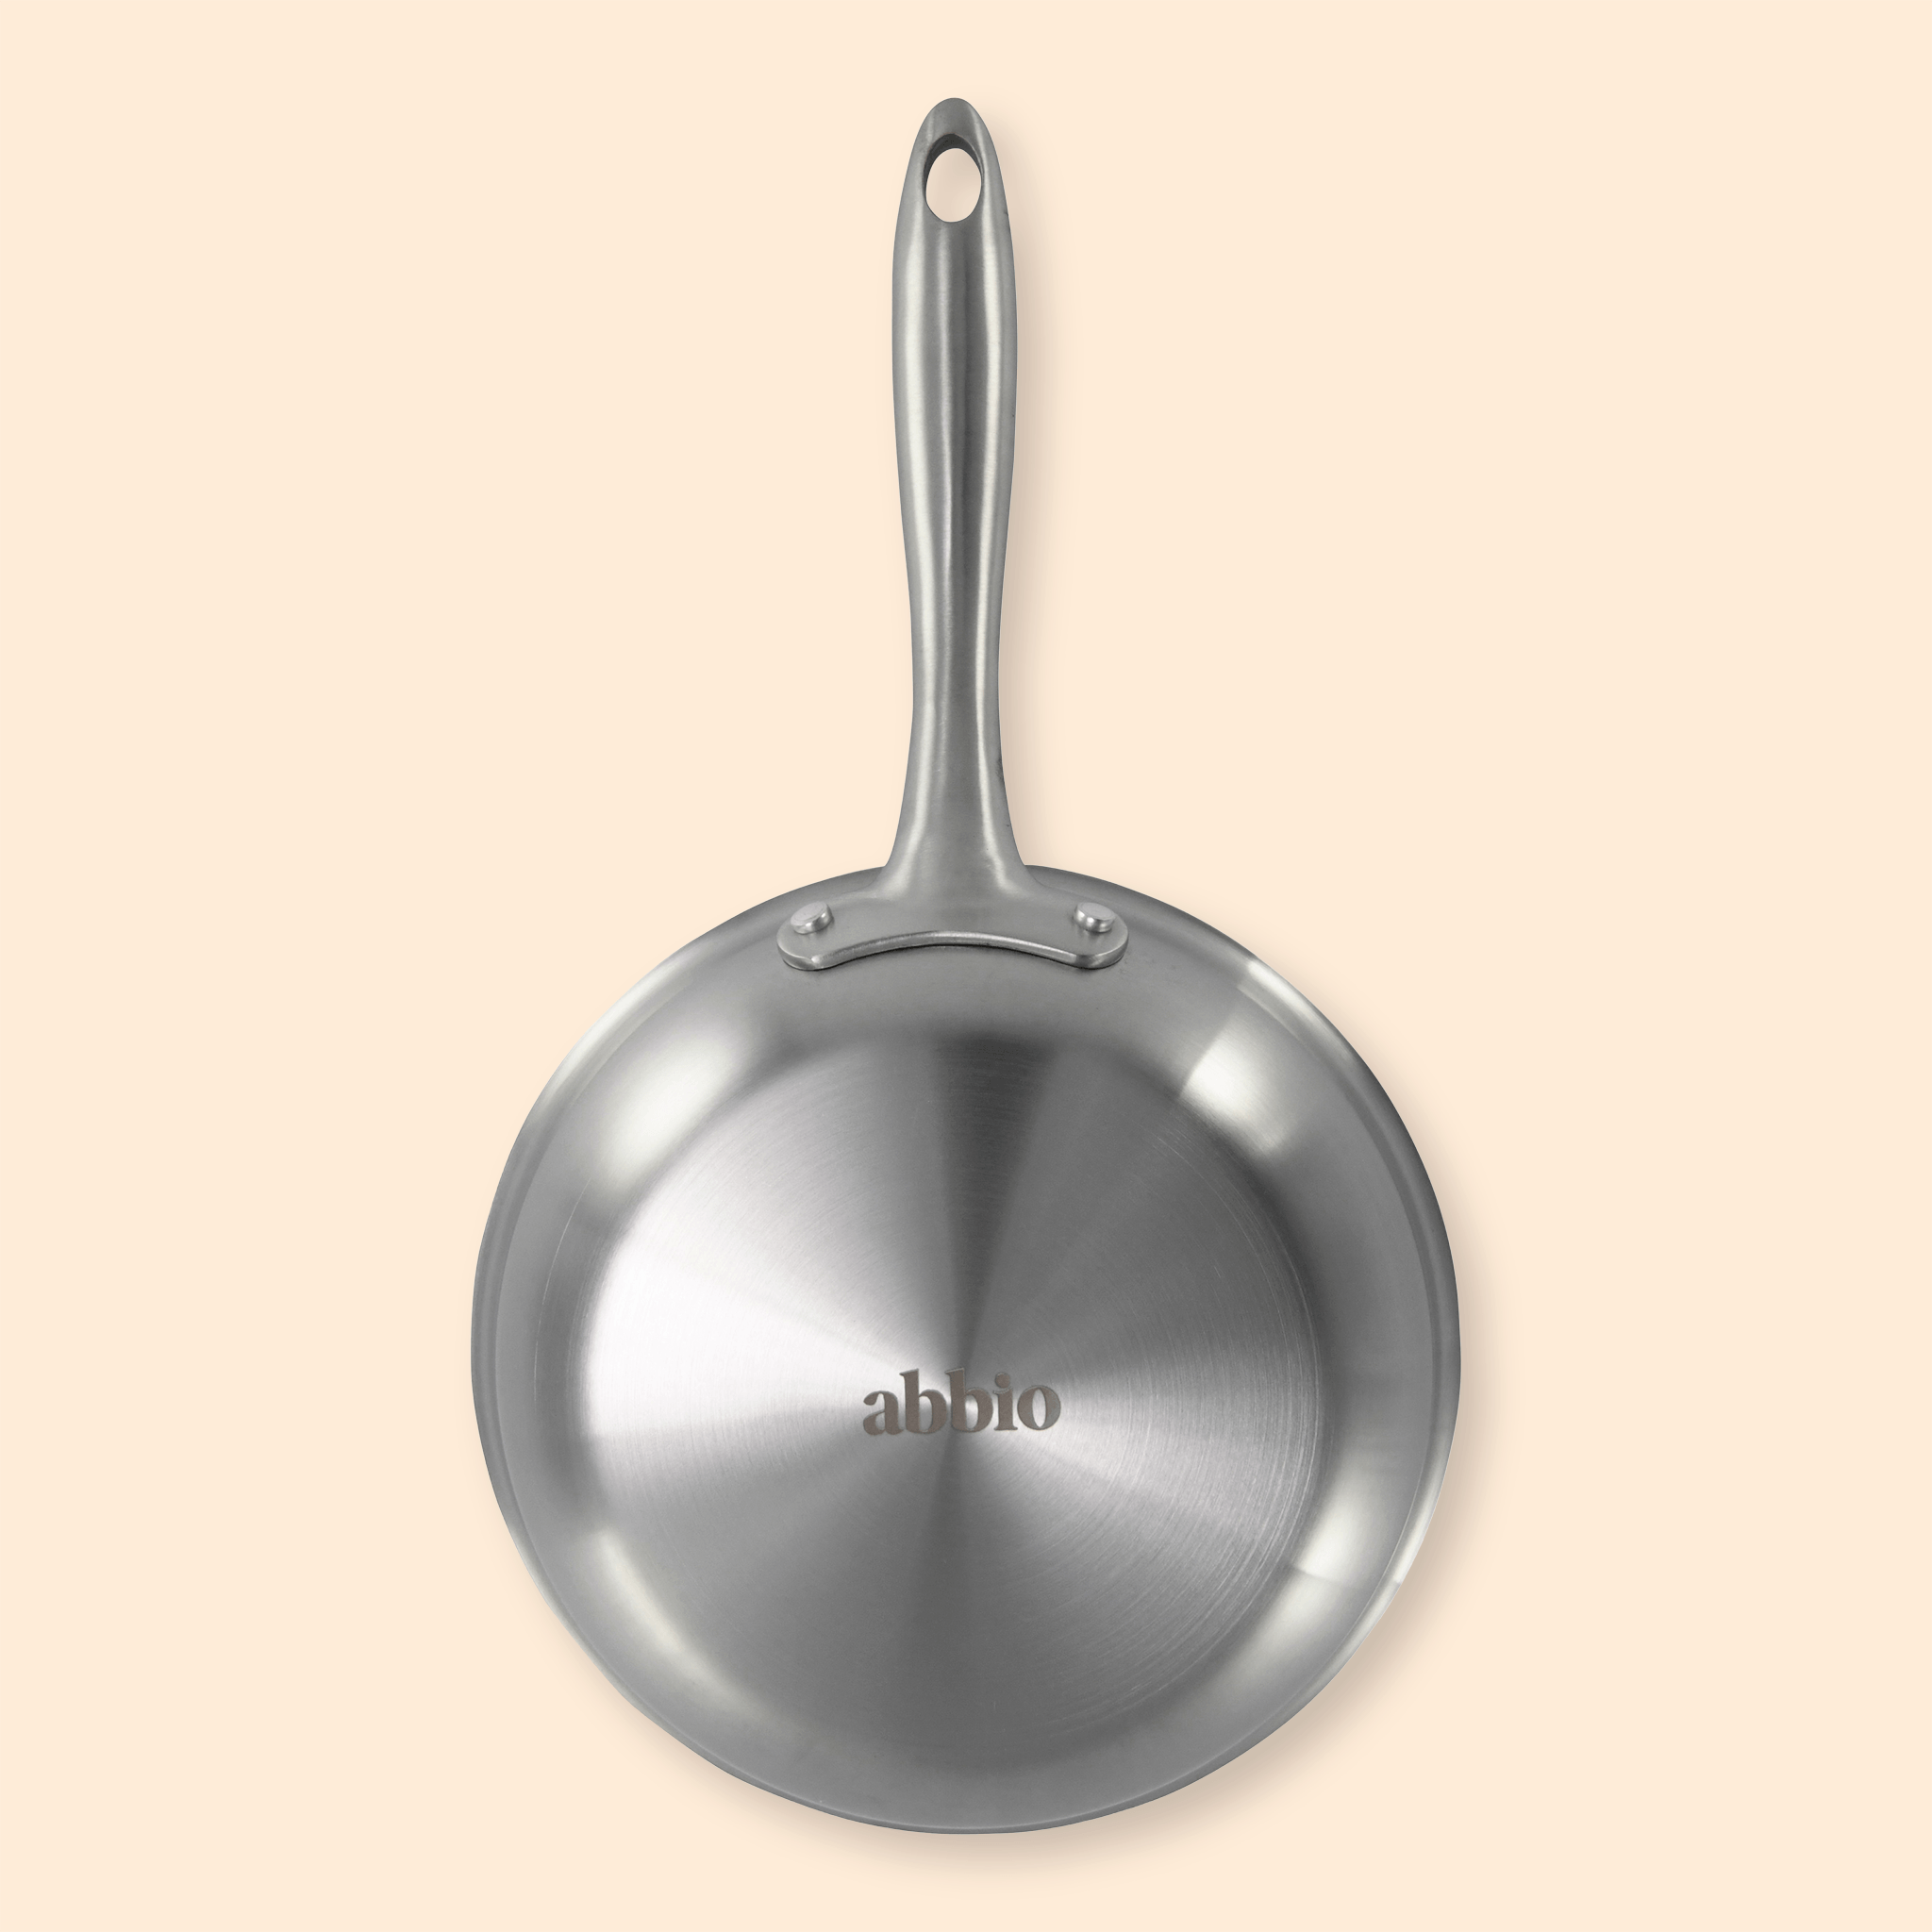  Abbio Small Nonstick Skillet, 8” Diameter, Stainless